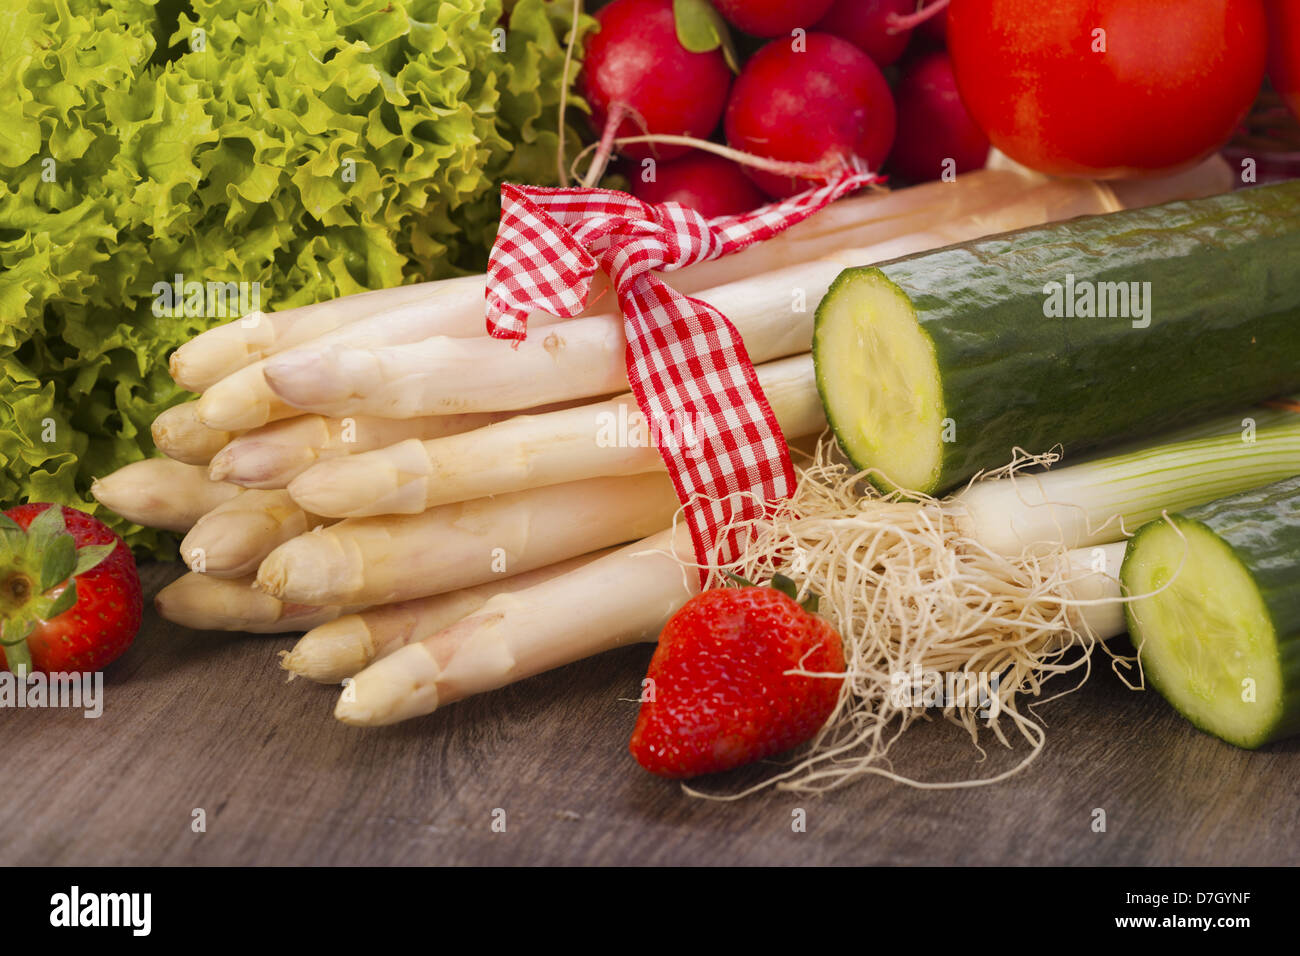 Harvest Fresh seasonal vegetables with asparagus and salad Stock Photo